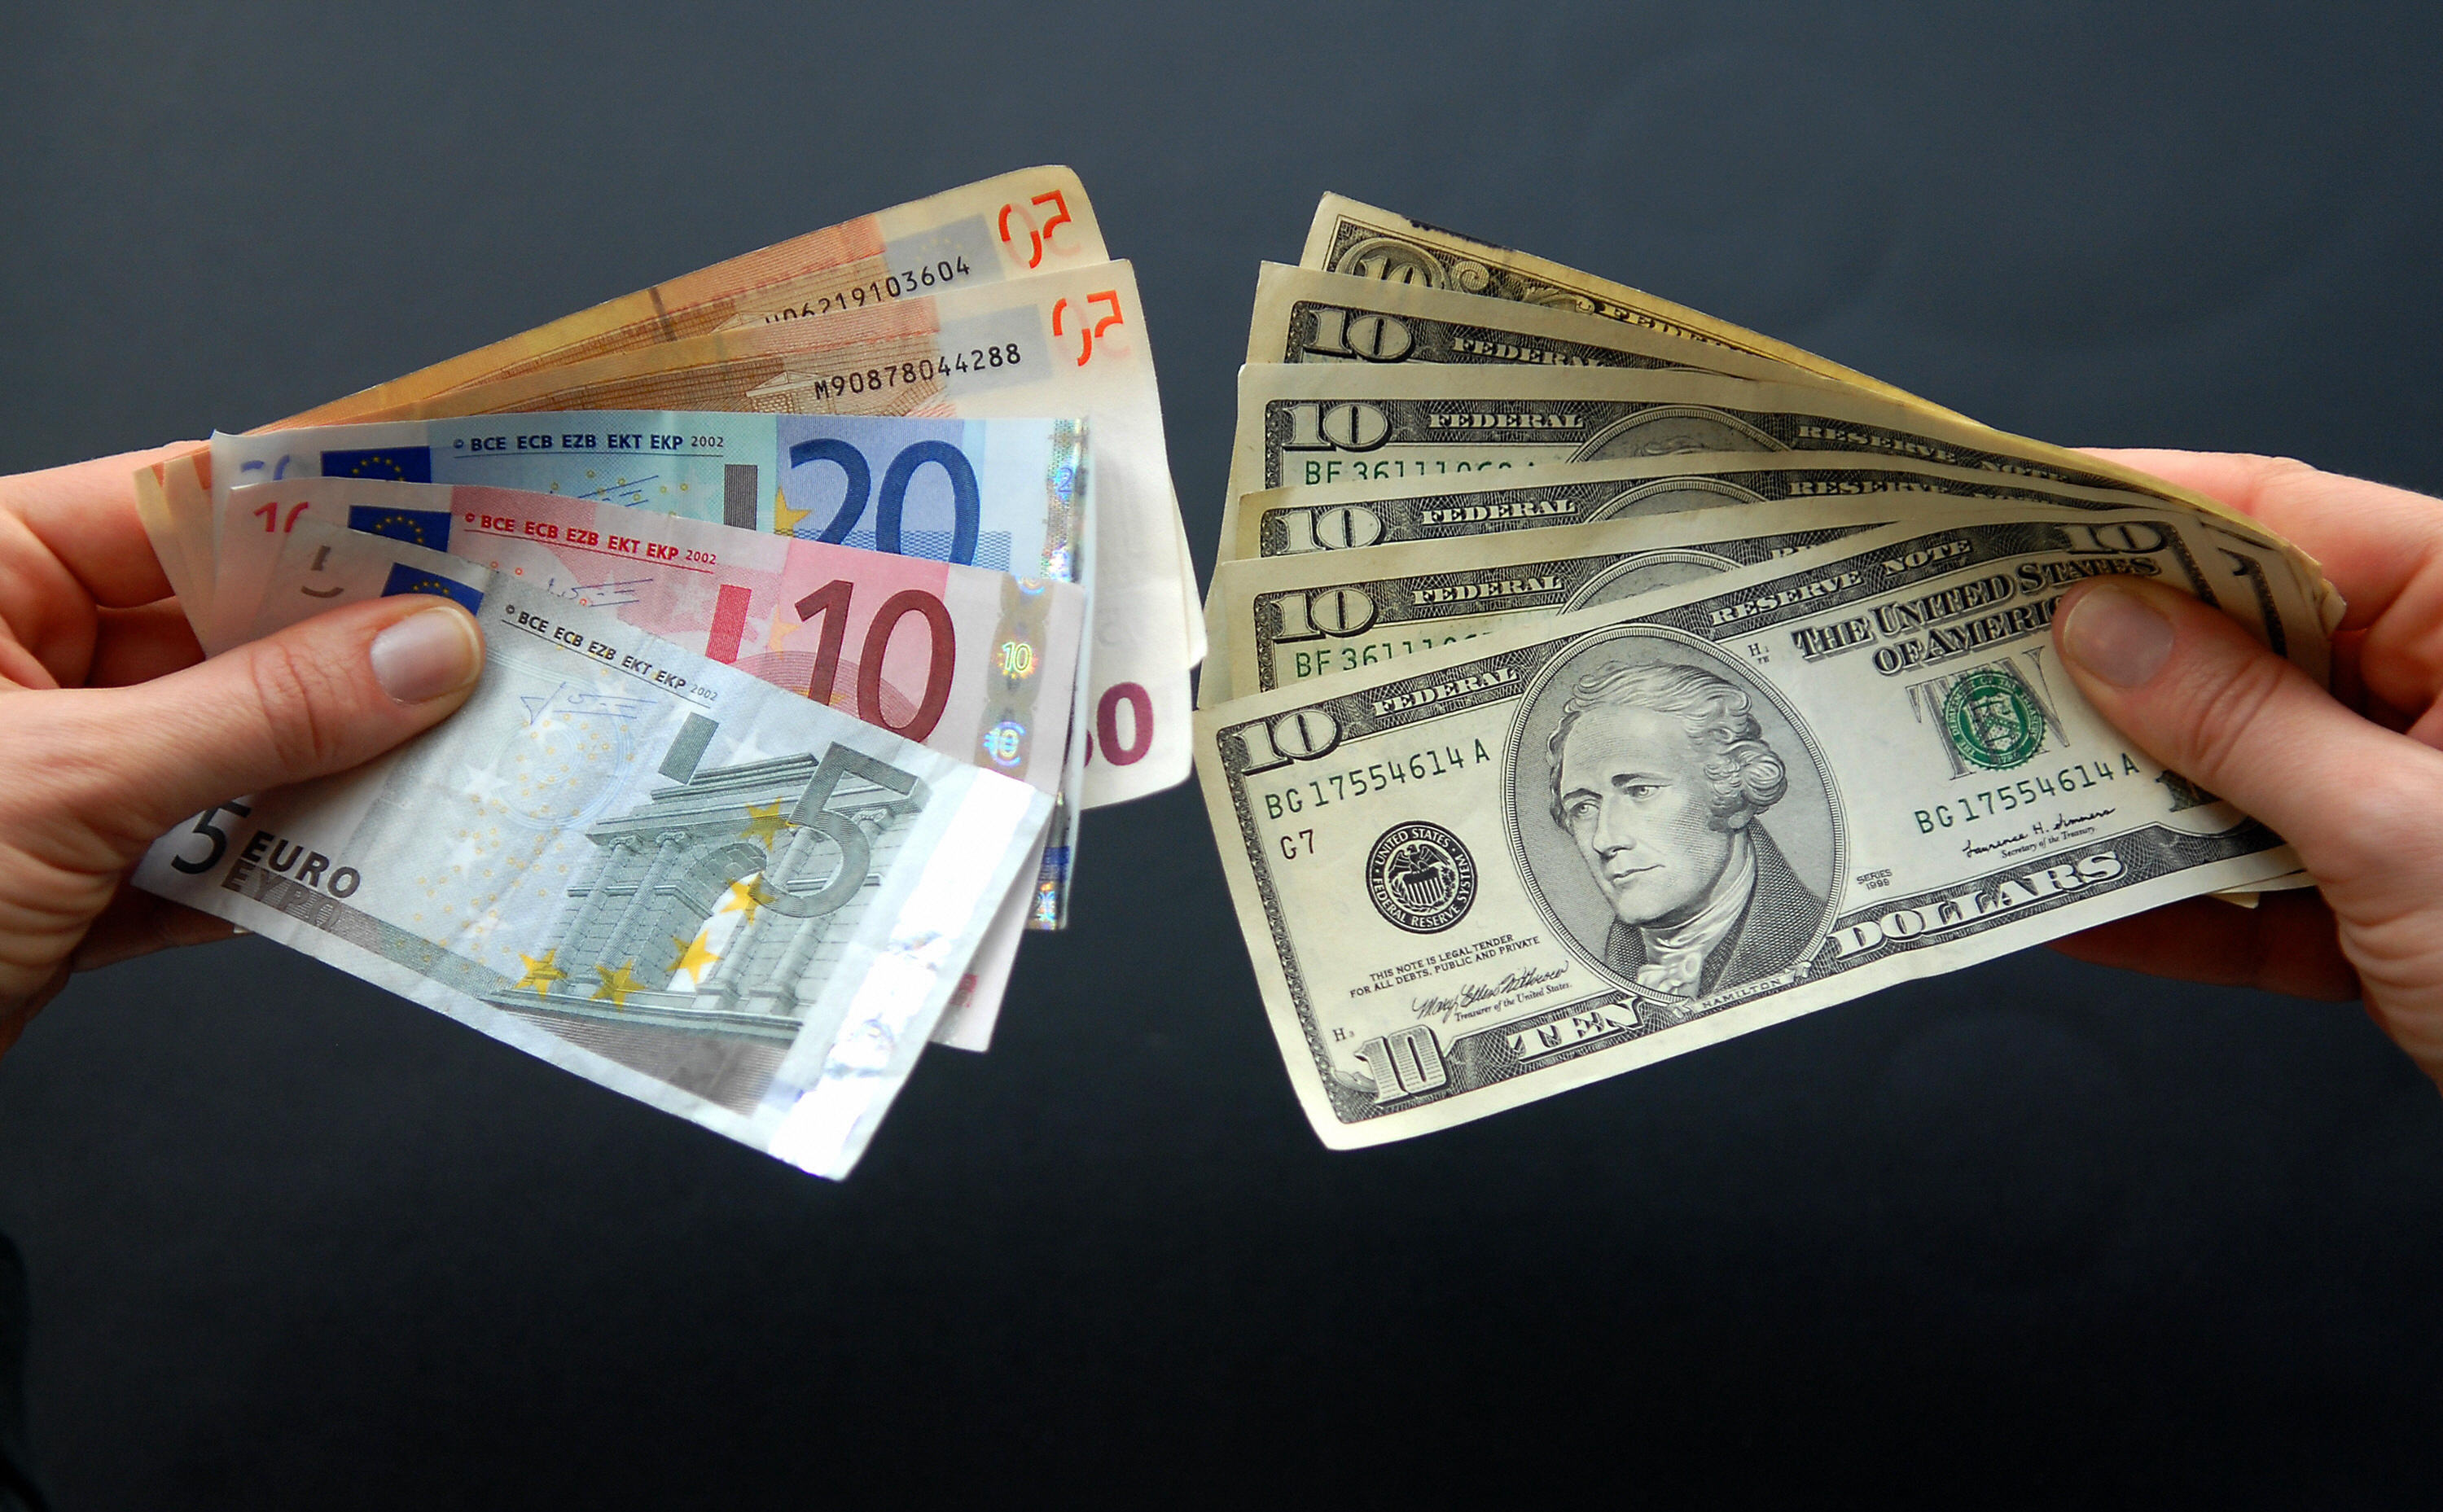 5 EUR to USD | Convert Euros to US Dollars Exchange Rate